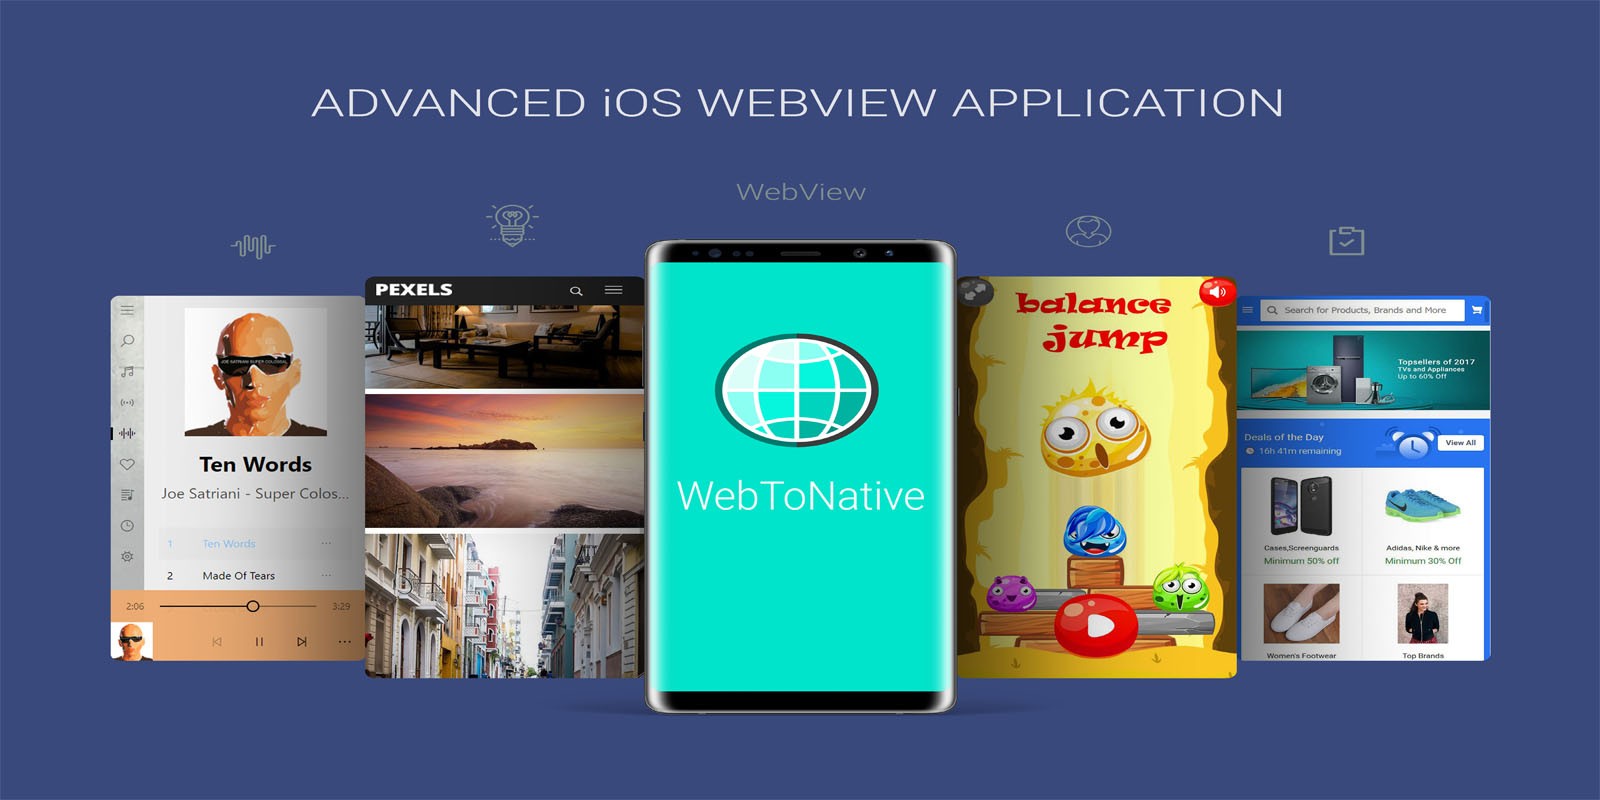 WebToNative - Advanced iOS WebView Application by Scriptwriter | Codester